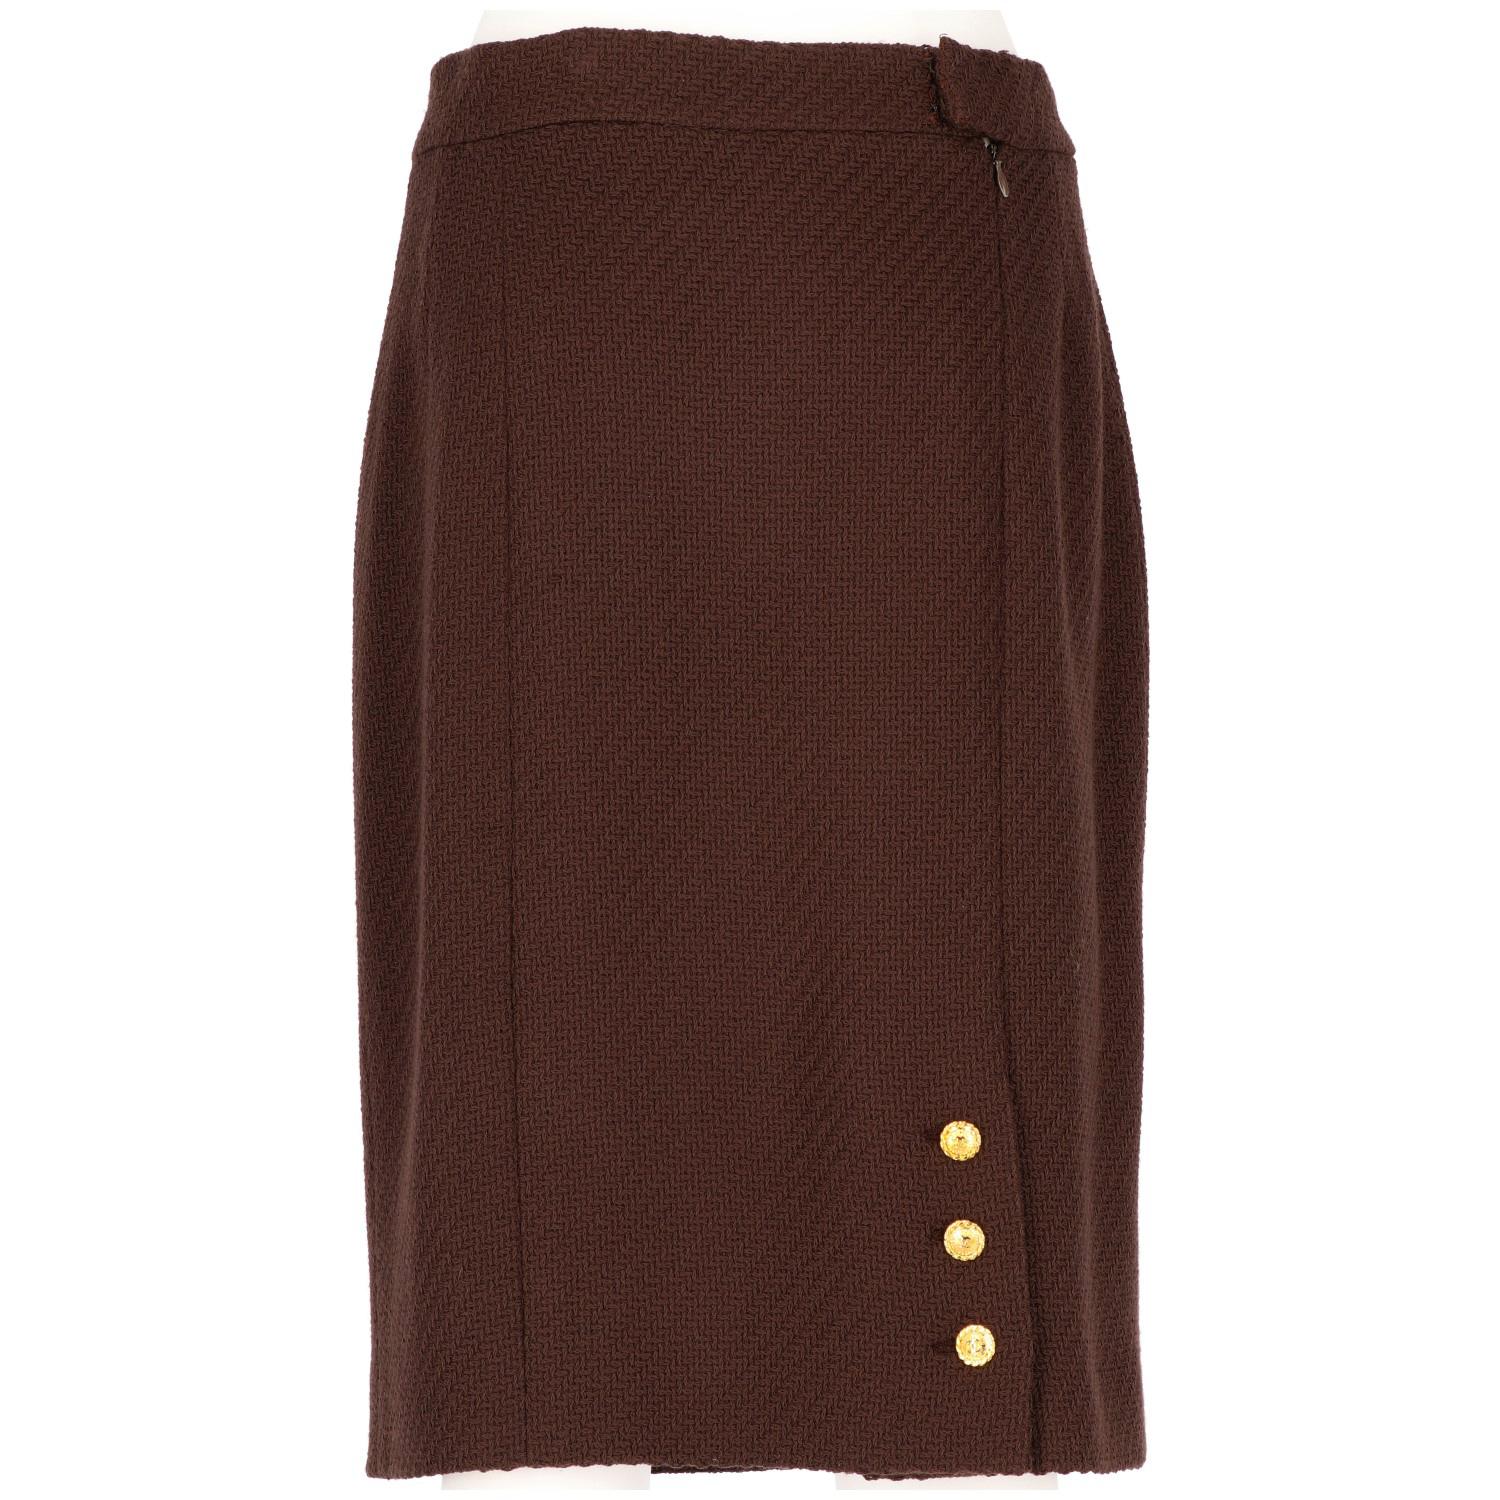 Women's 1990s Chanel brown Vintage Skirt Suit